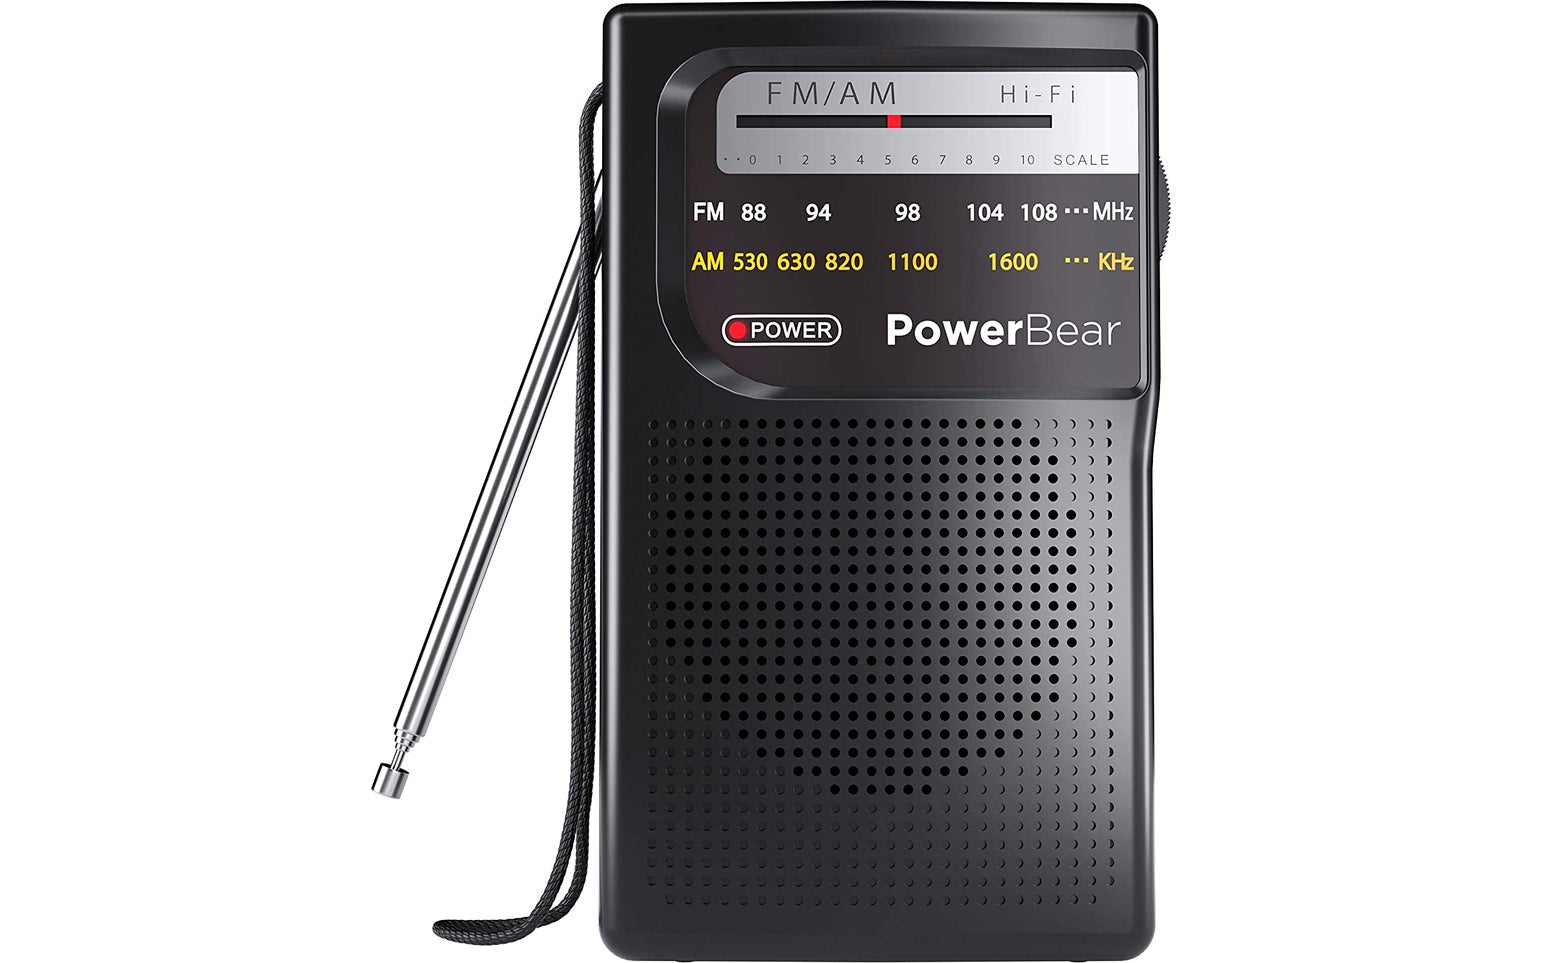 2-PowerBear portable radio